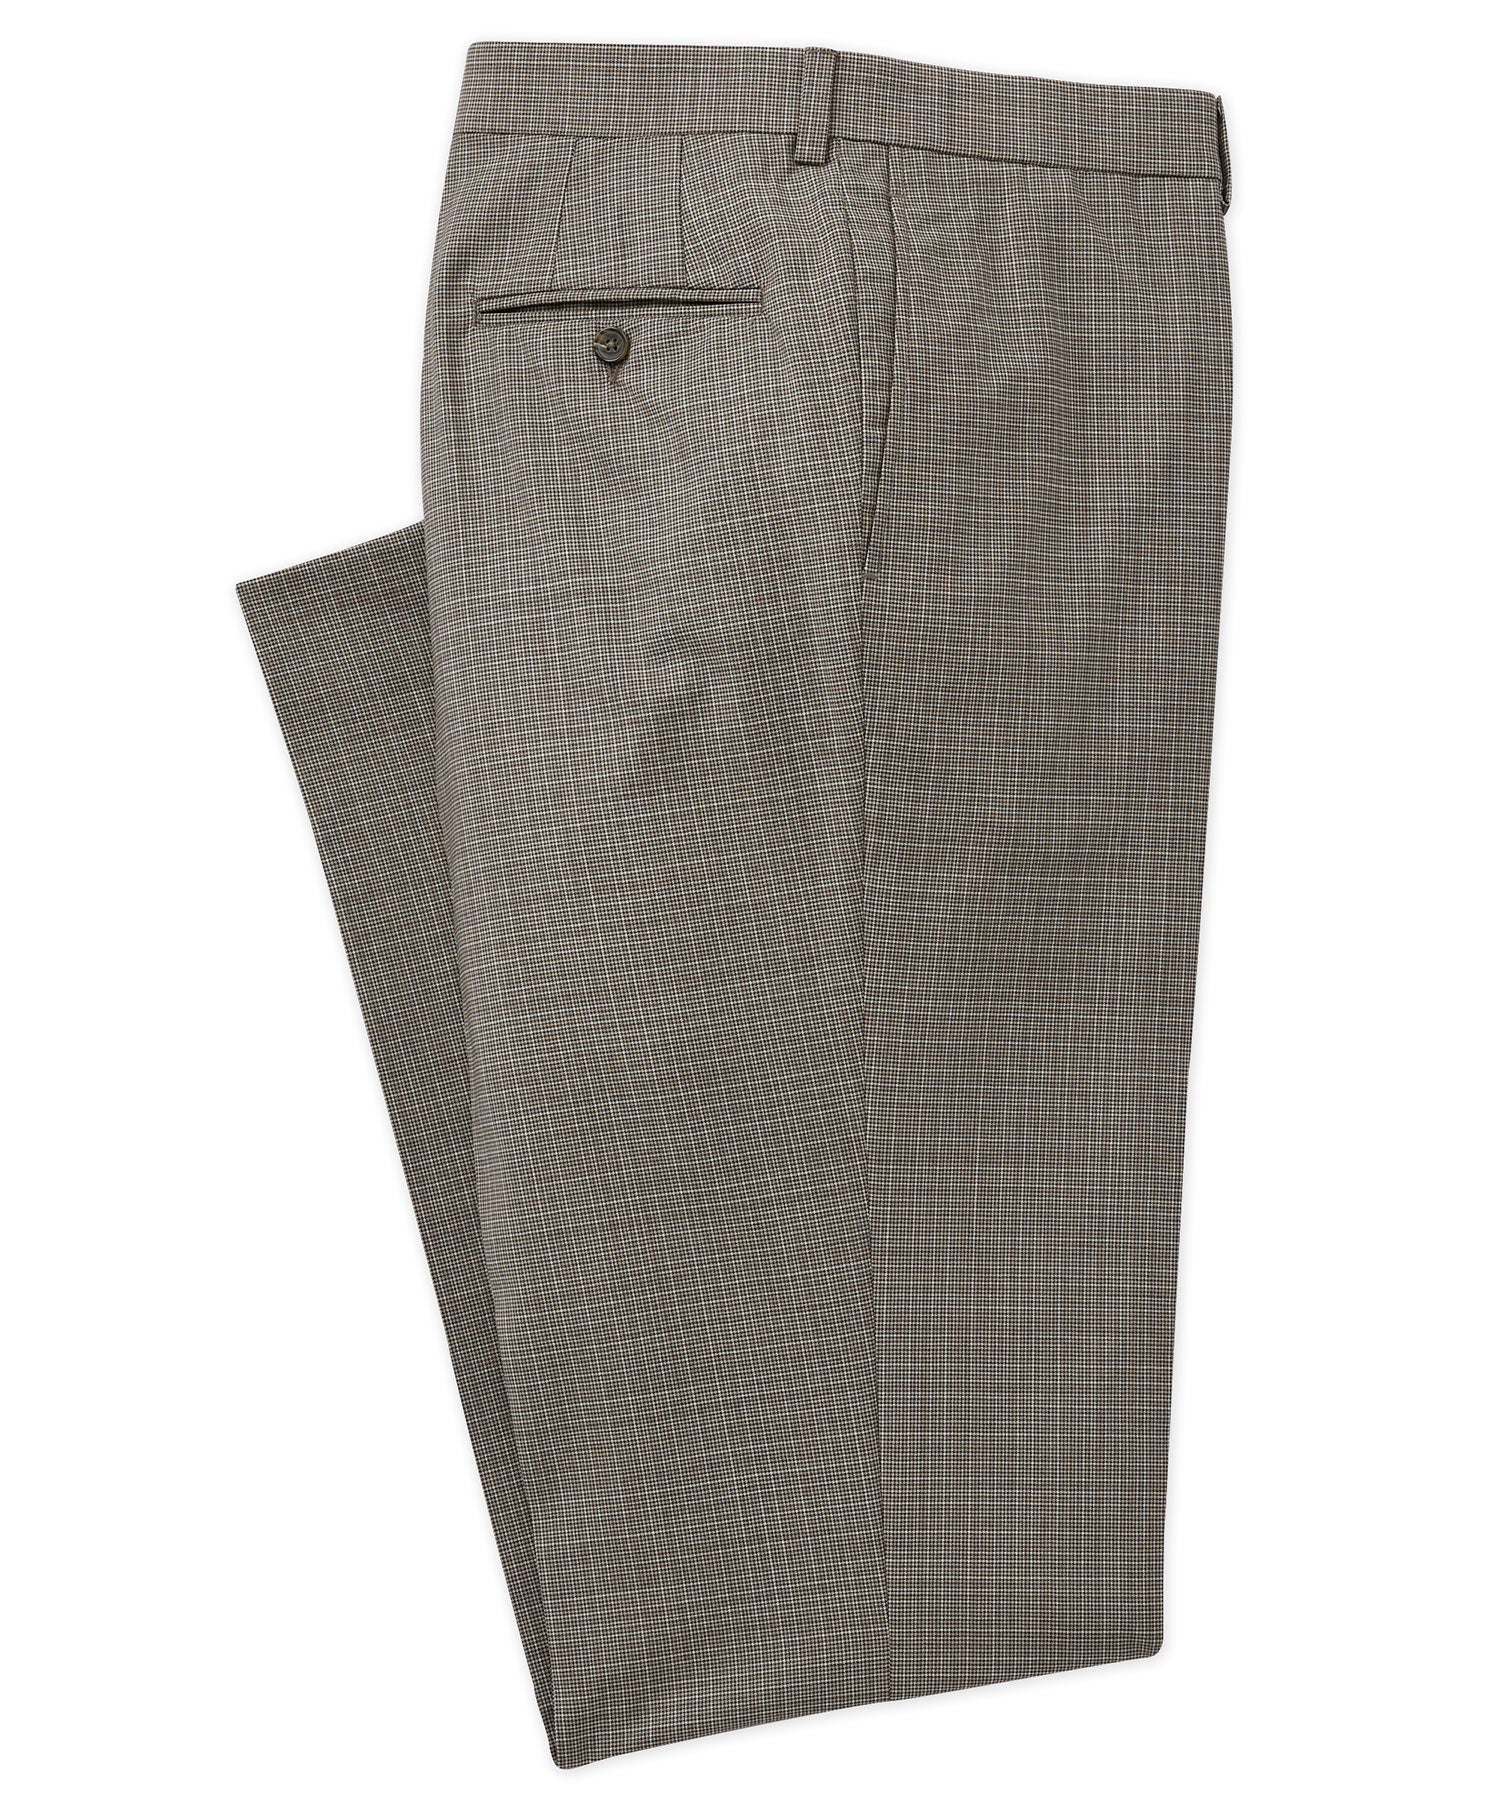 Jack Victor 100% Super 110s Reda Wool Flat Front Check Patterned Dress Pants, Men's Big & Tall